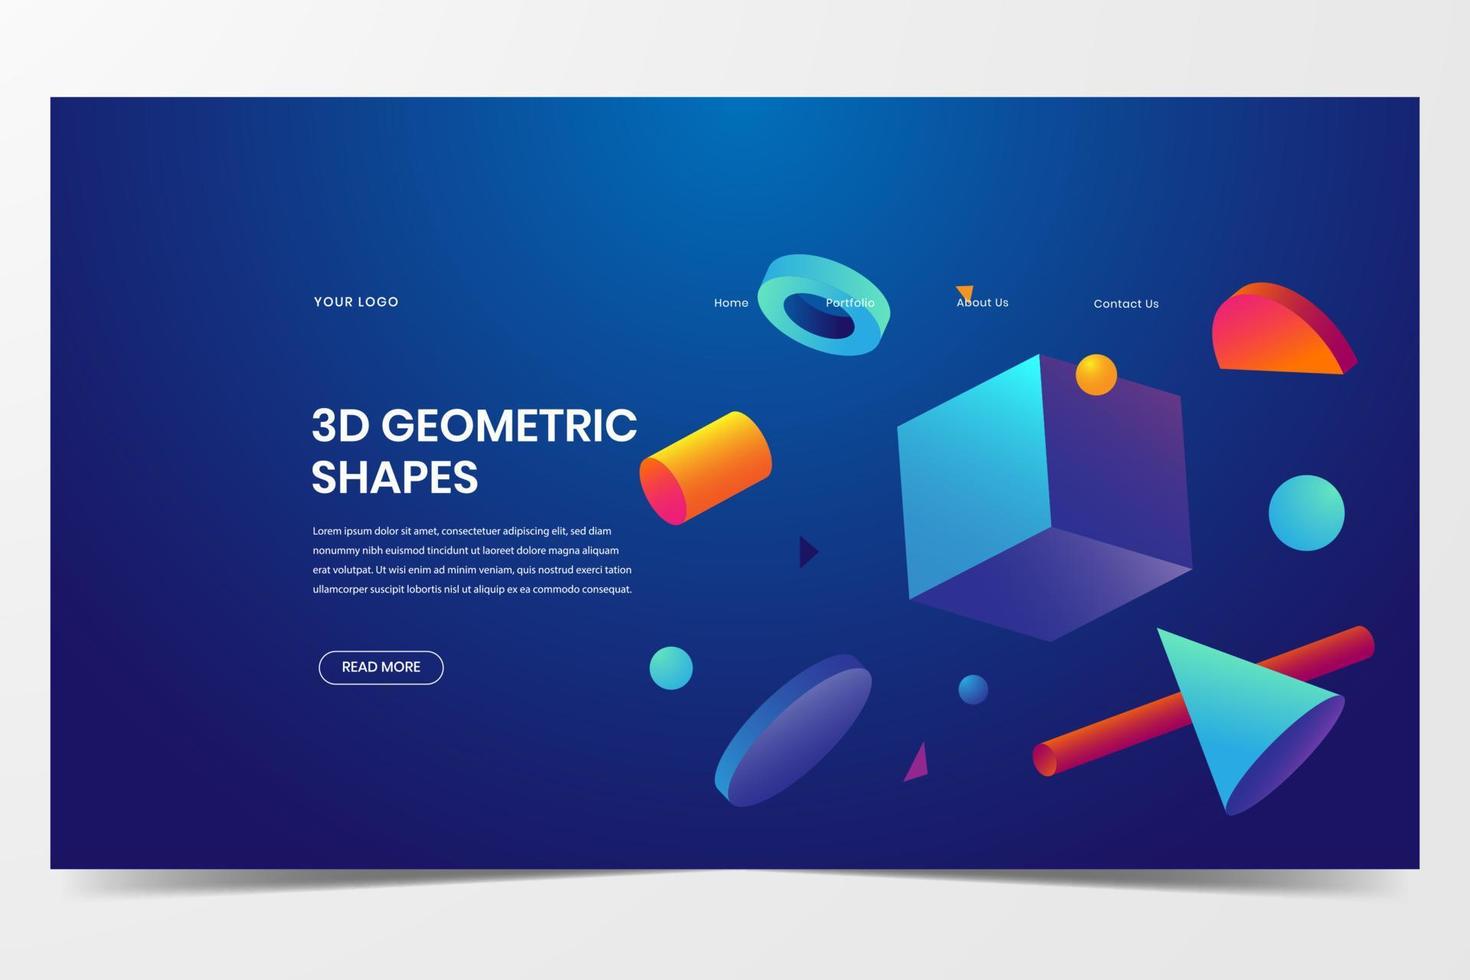 3D Geometric Shapes landing page design on blue background vector